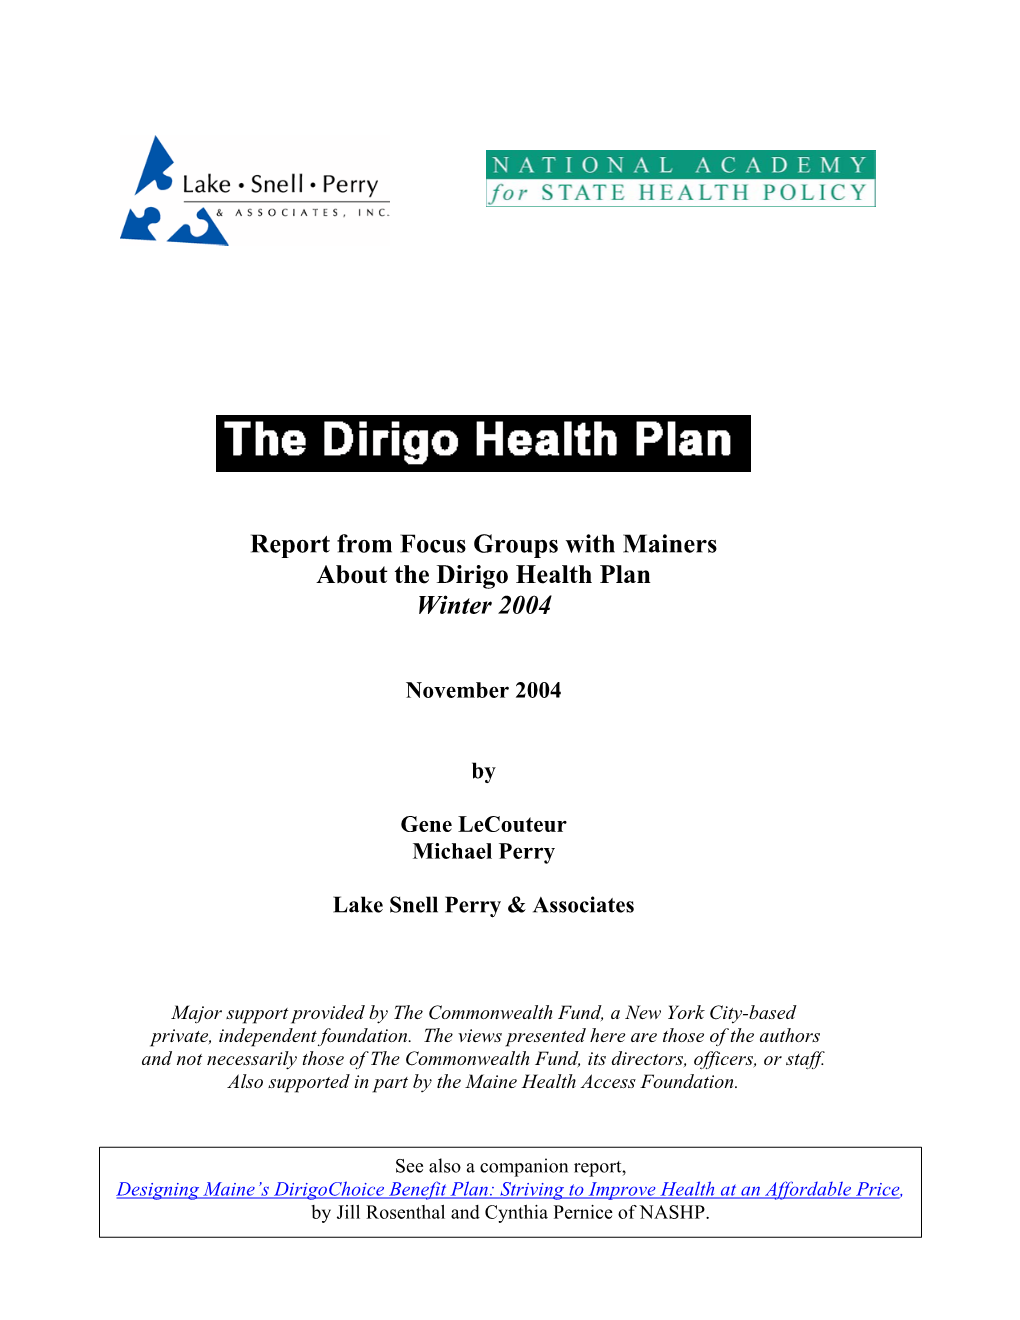 The Dirigo Health Plan Winter 2004